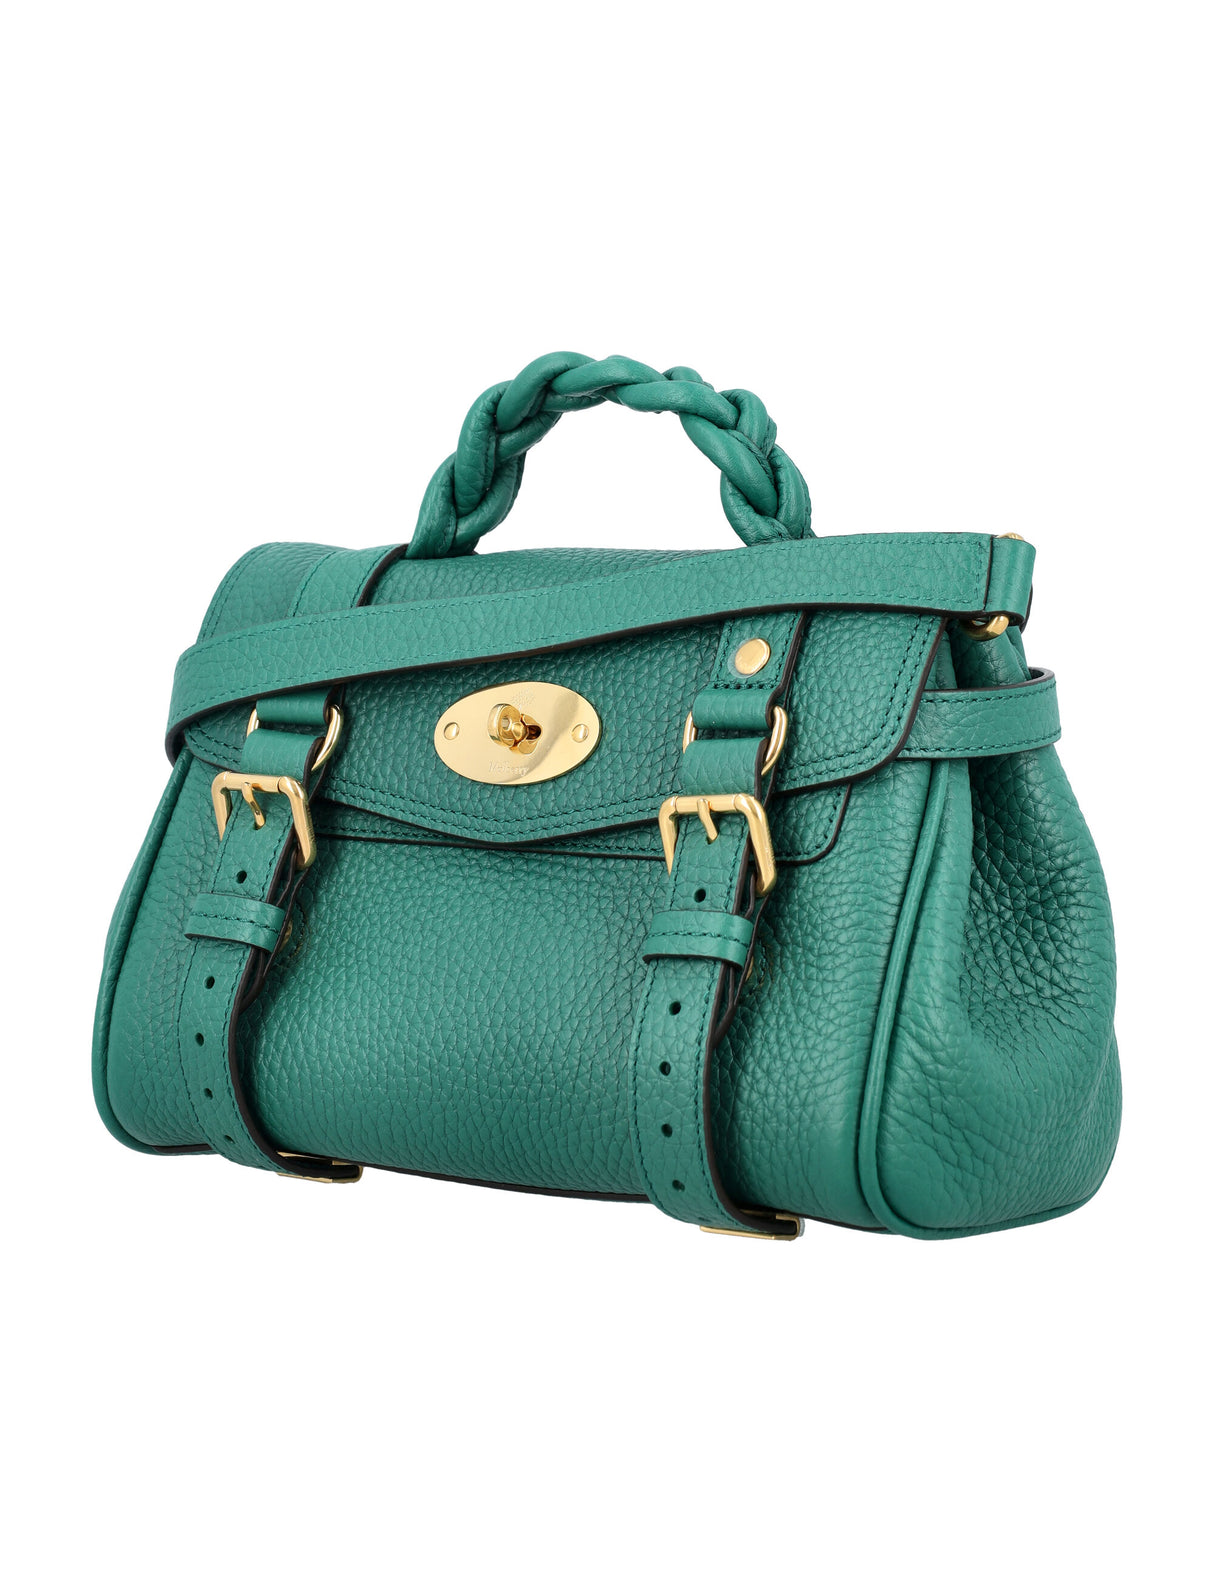 MULBERRY Emerald Mini Alexa Leather Shoulder Bag with Braided Handle - 22cm x 17cm x 10cm